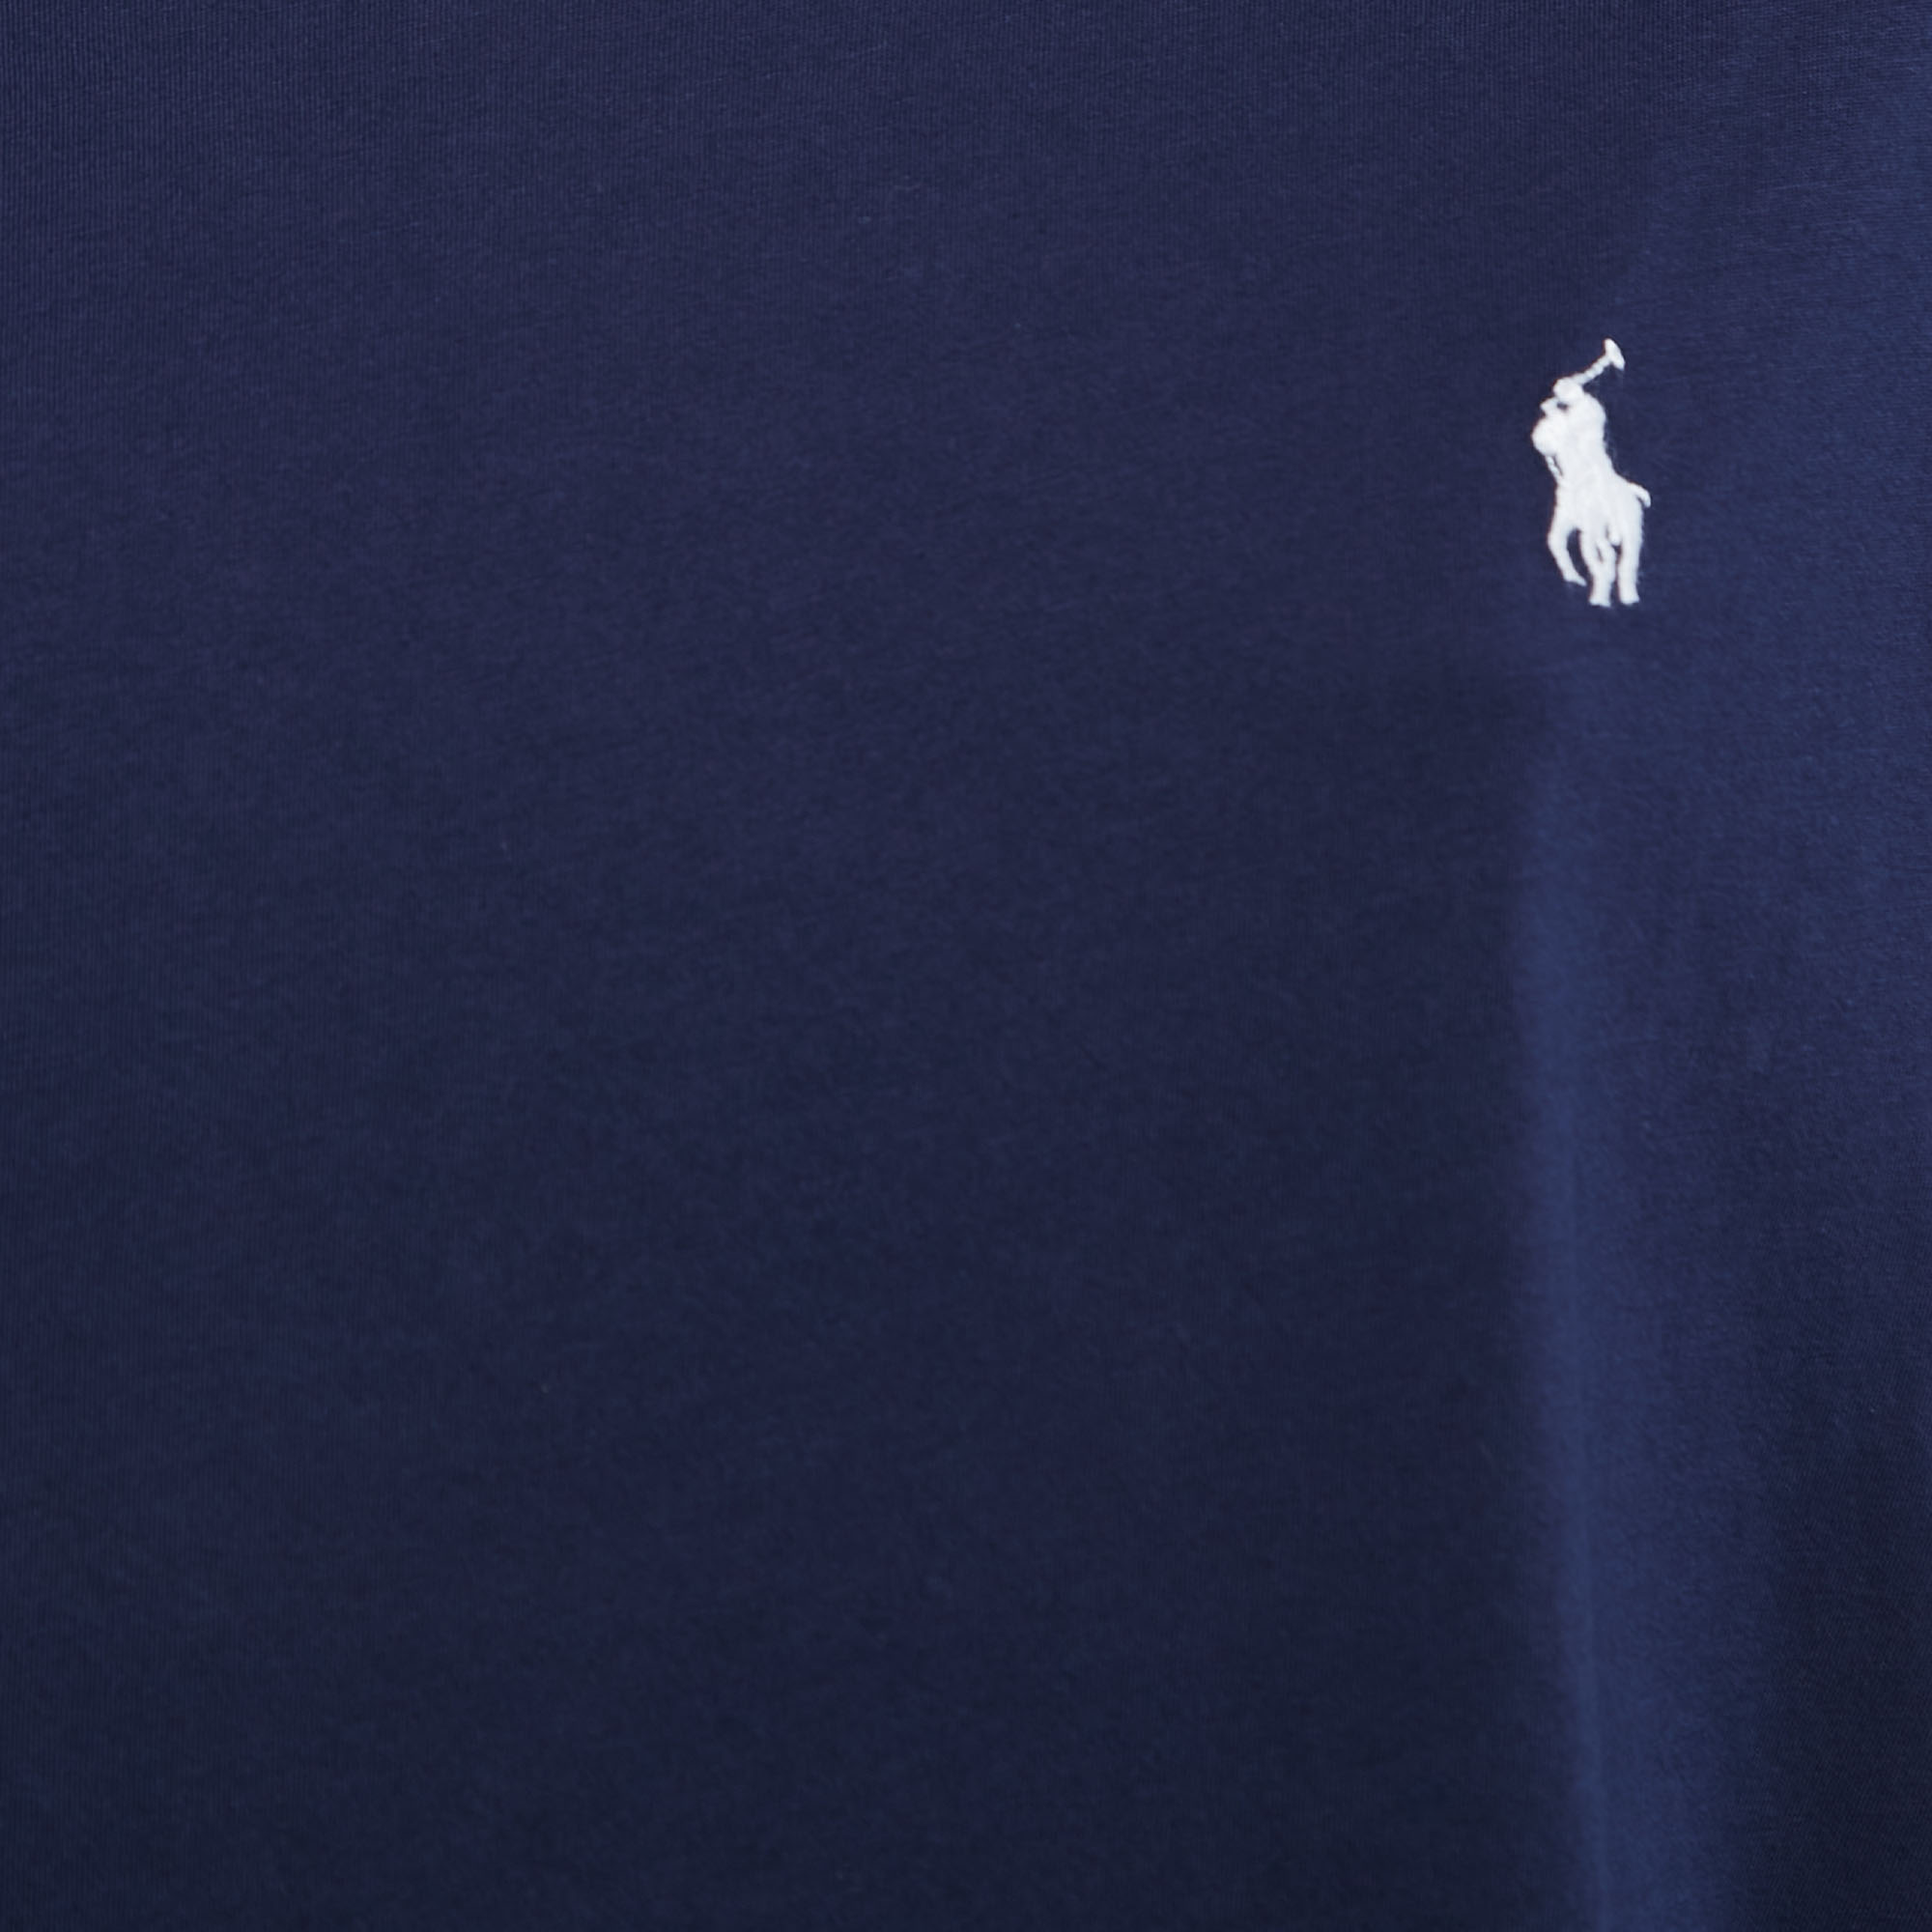 Polo Ralph Lauren Navy Blue Cotton Logo Embroidered Crew Neck T-Shirt XXL